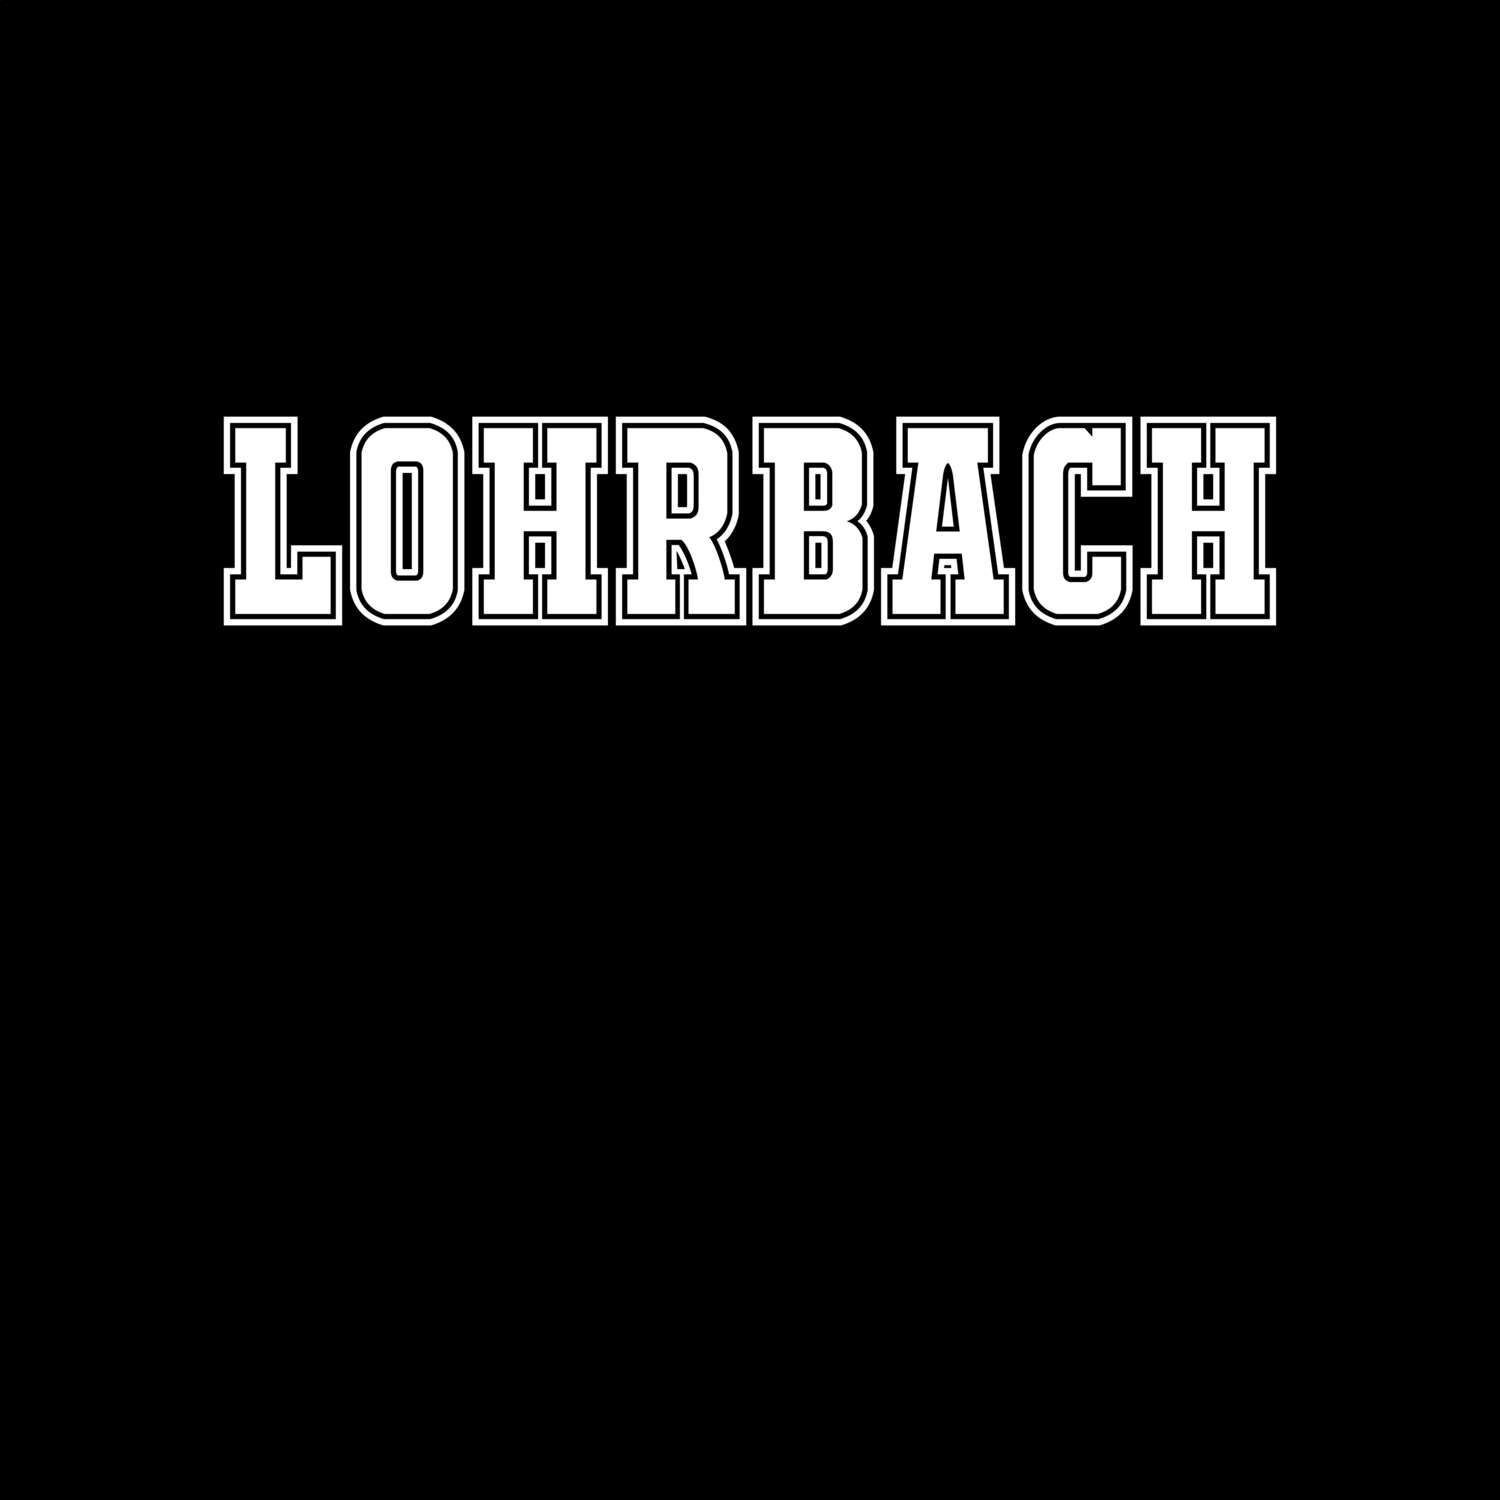 Lohrbach T-Shirt »Classic«